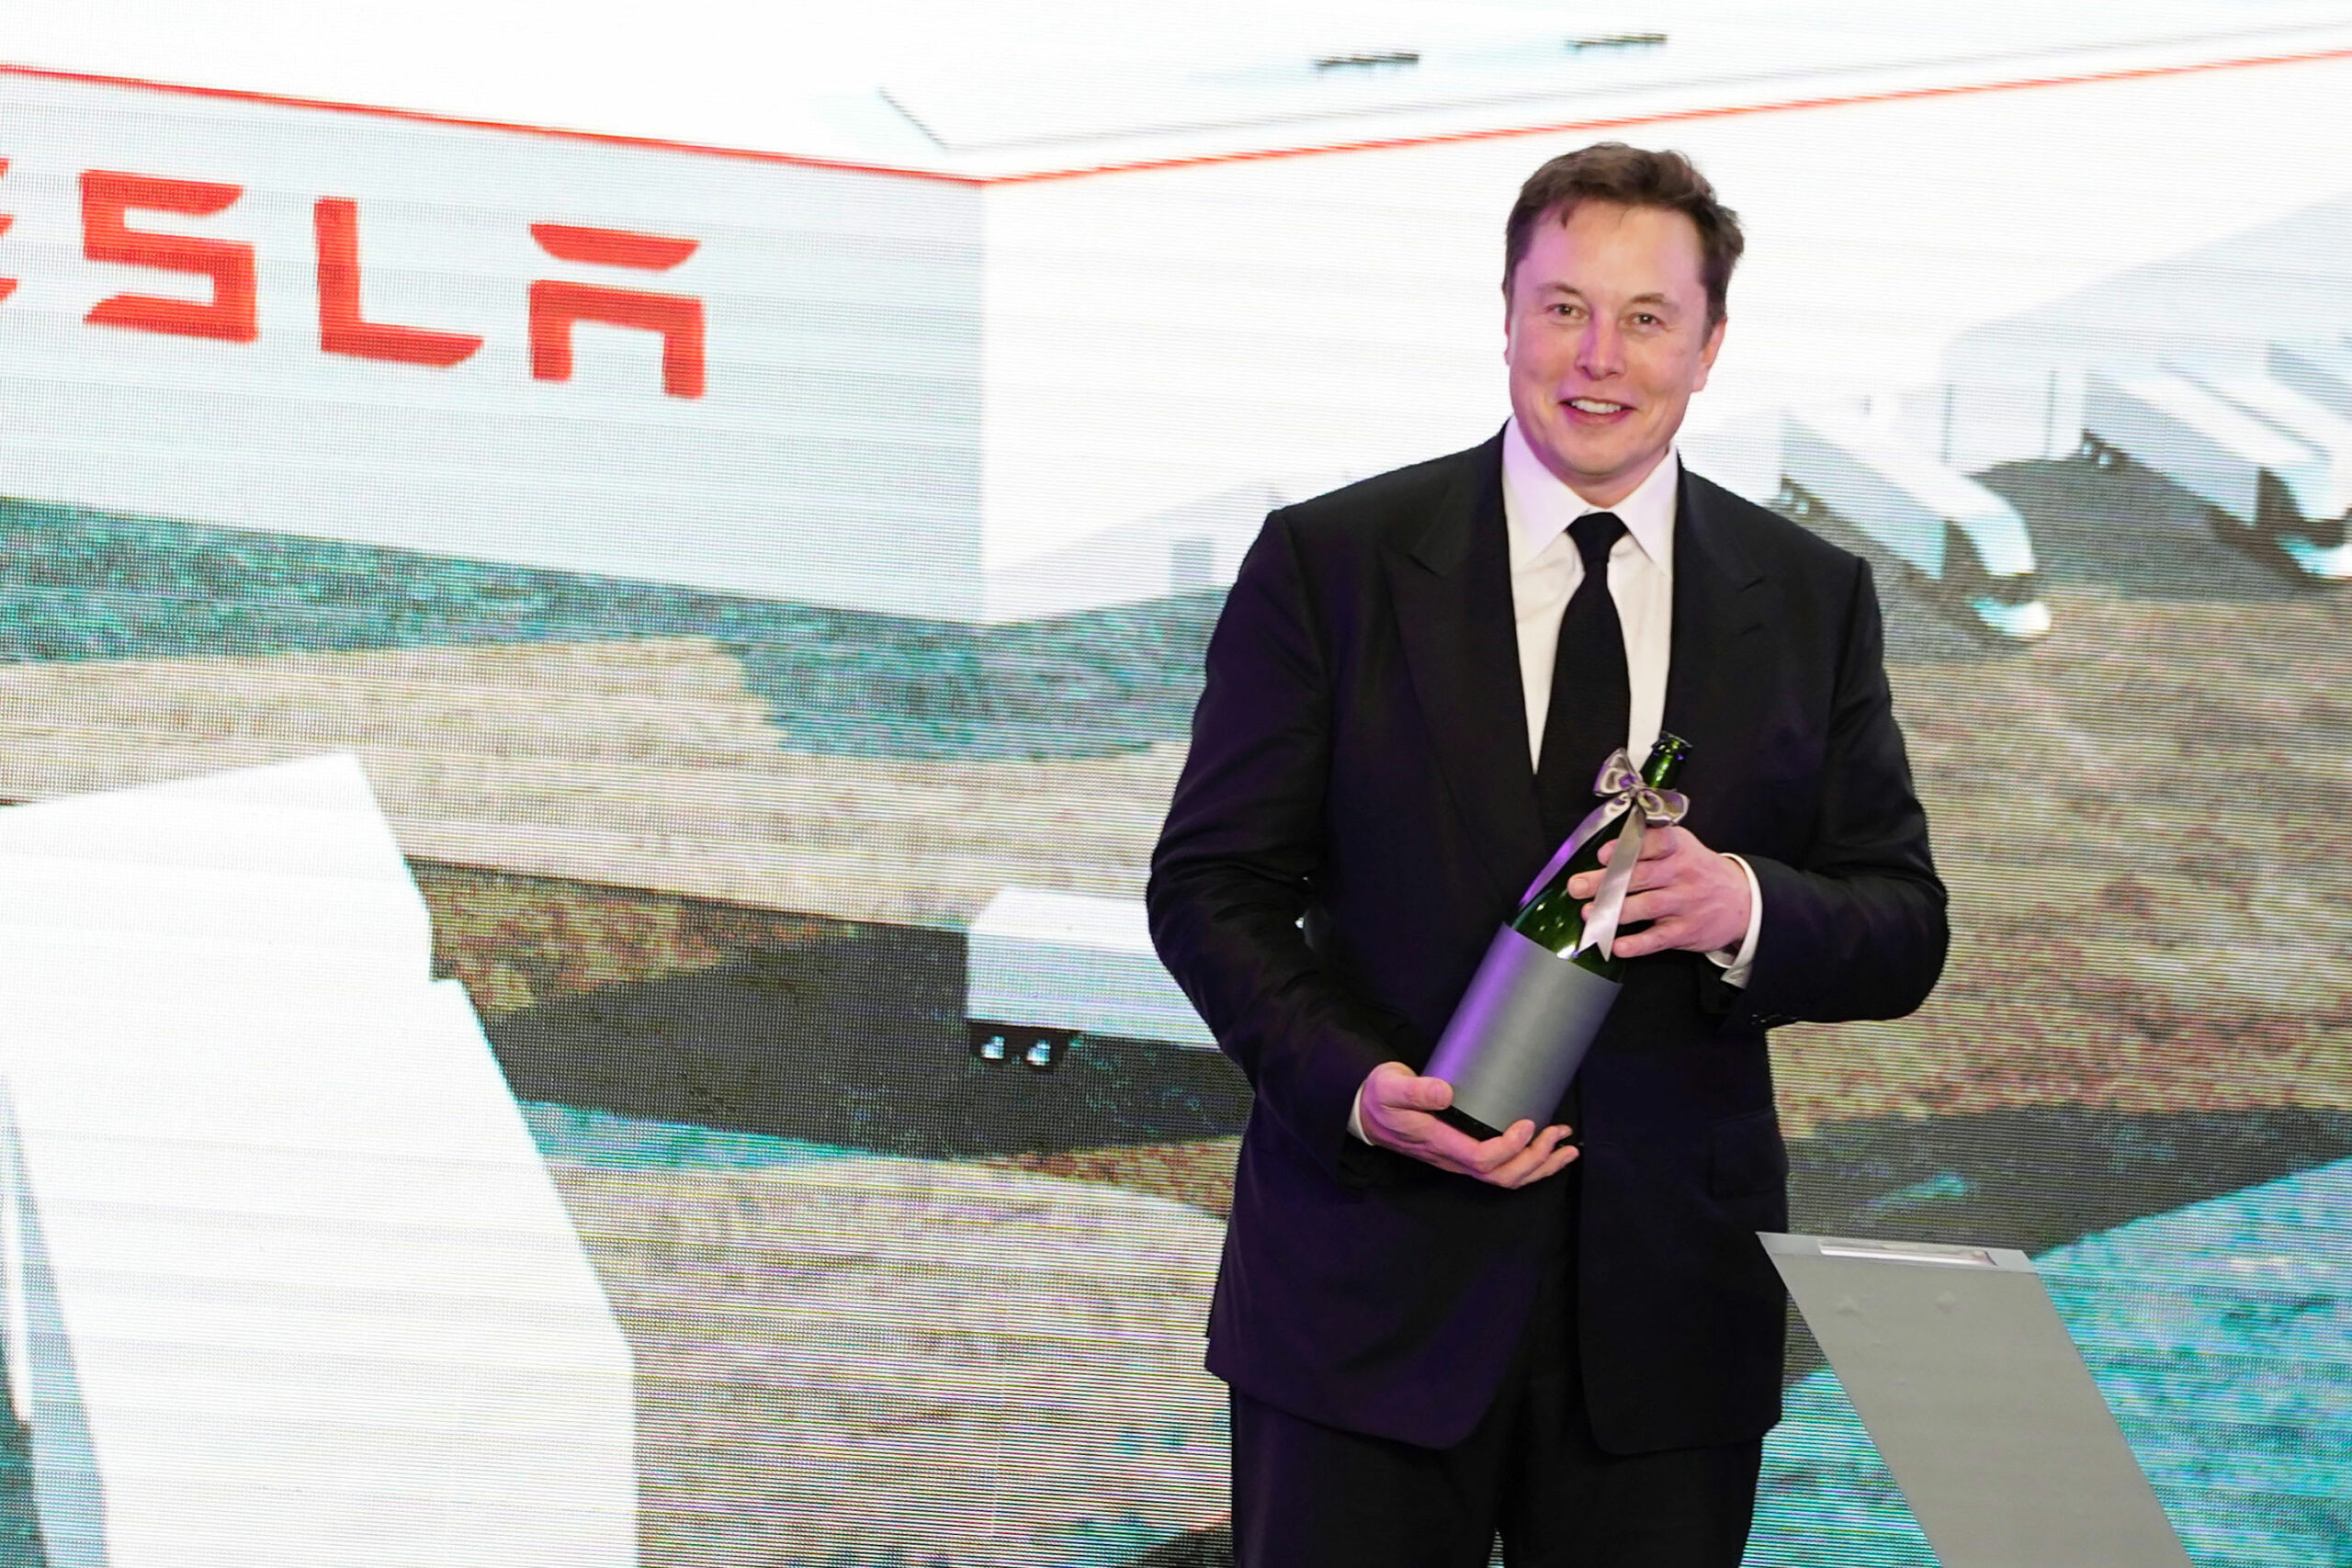 Tesla will build its next Gigafactory near Austin, Texas